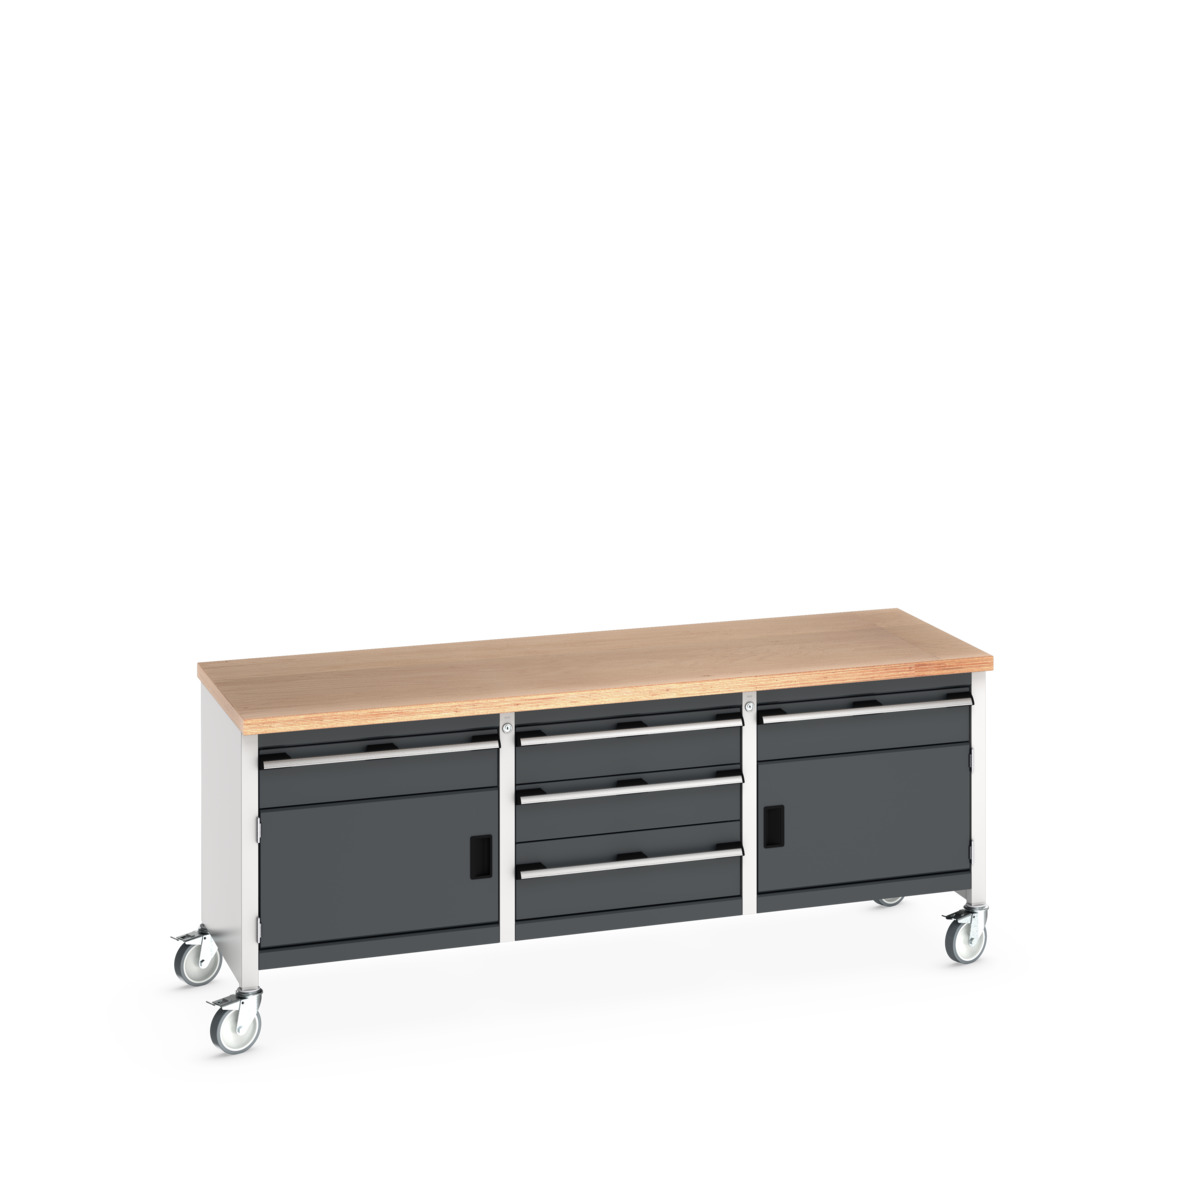 41002133. - cubio mobile storage bench (mpx)